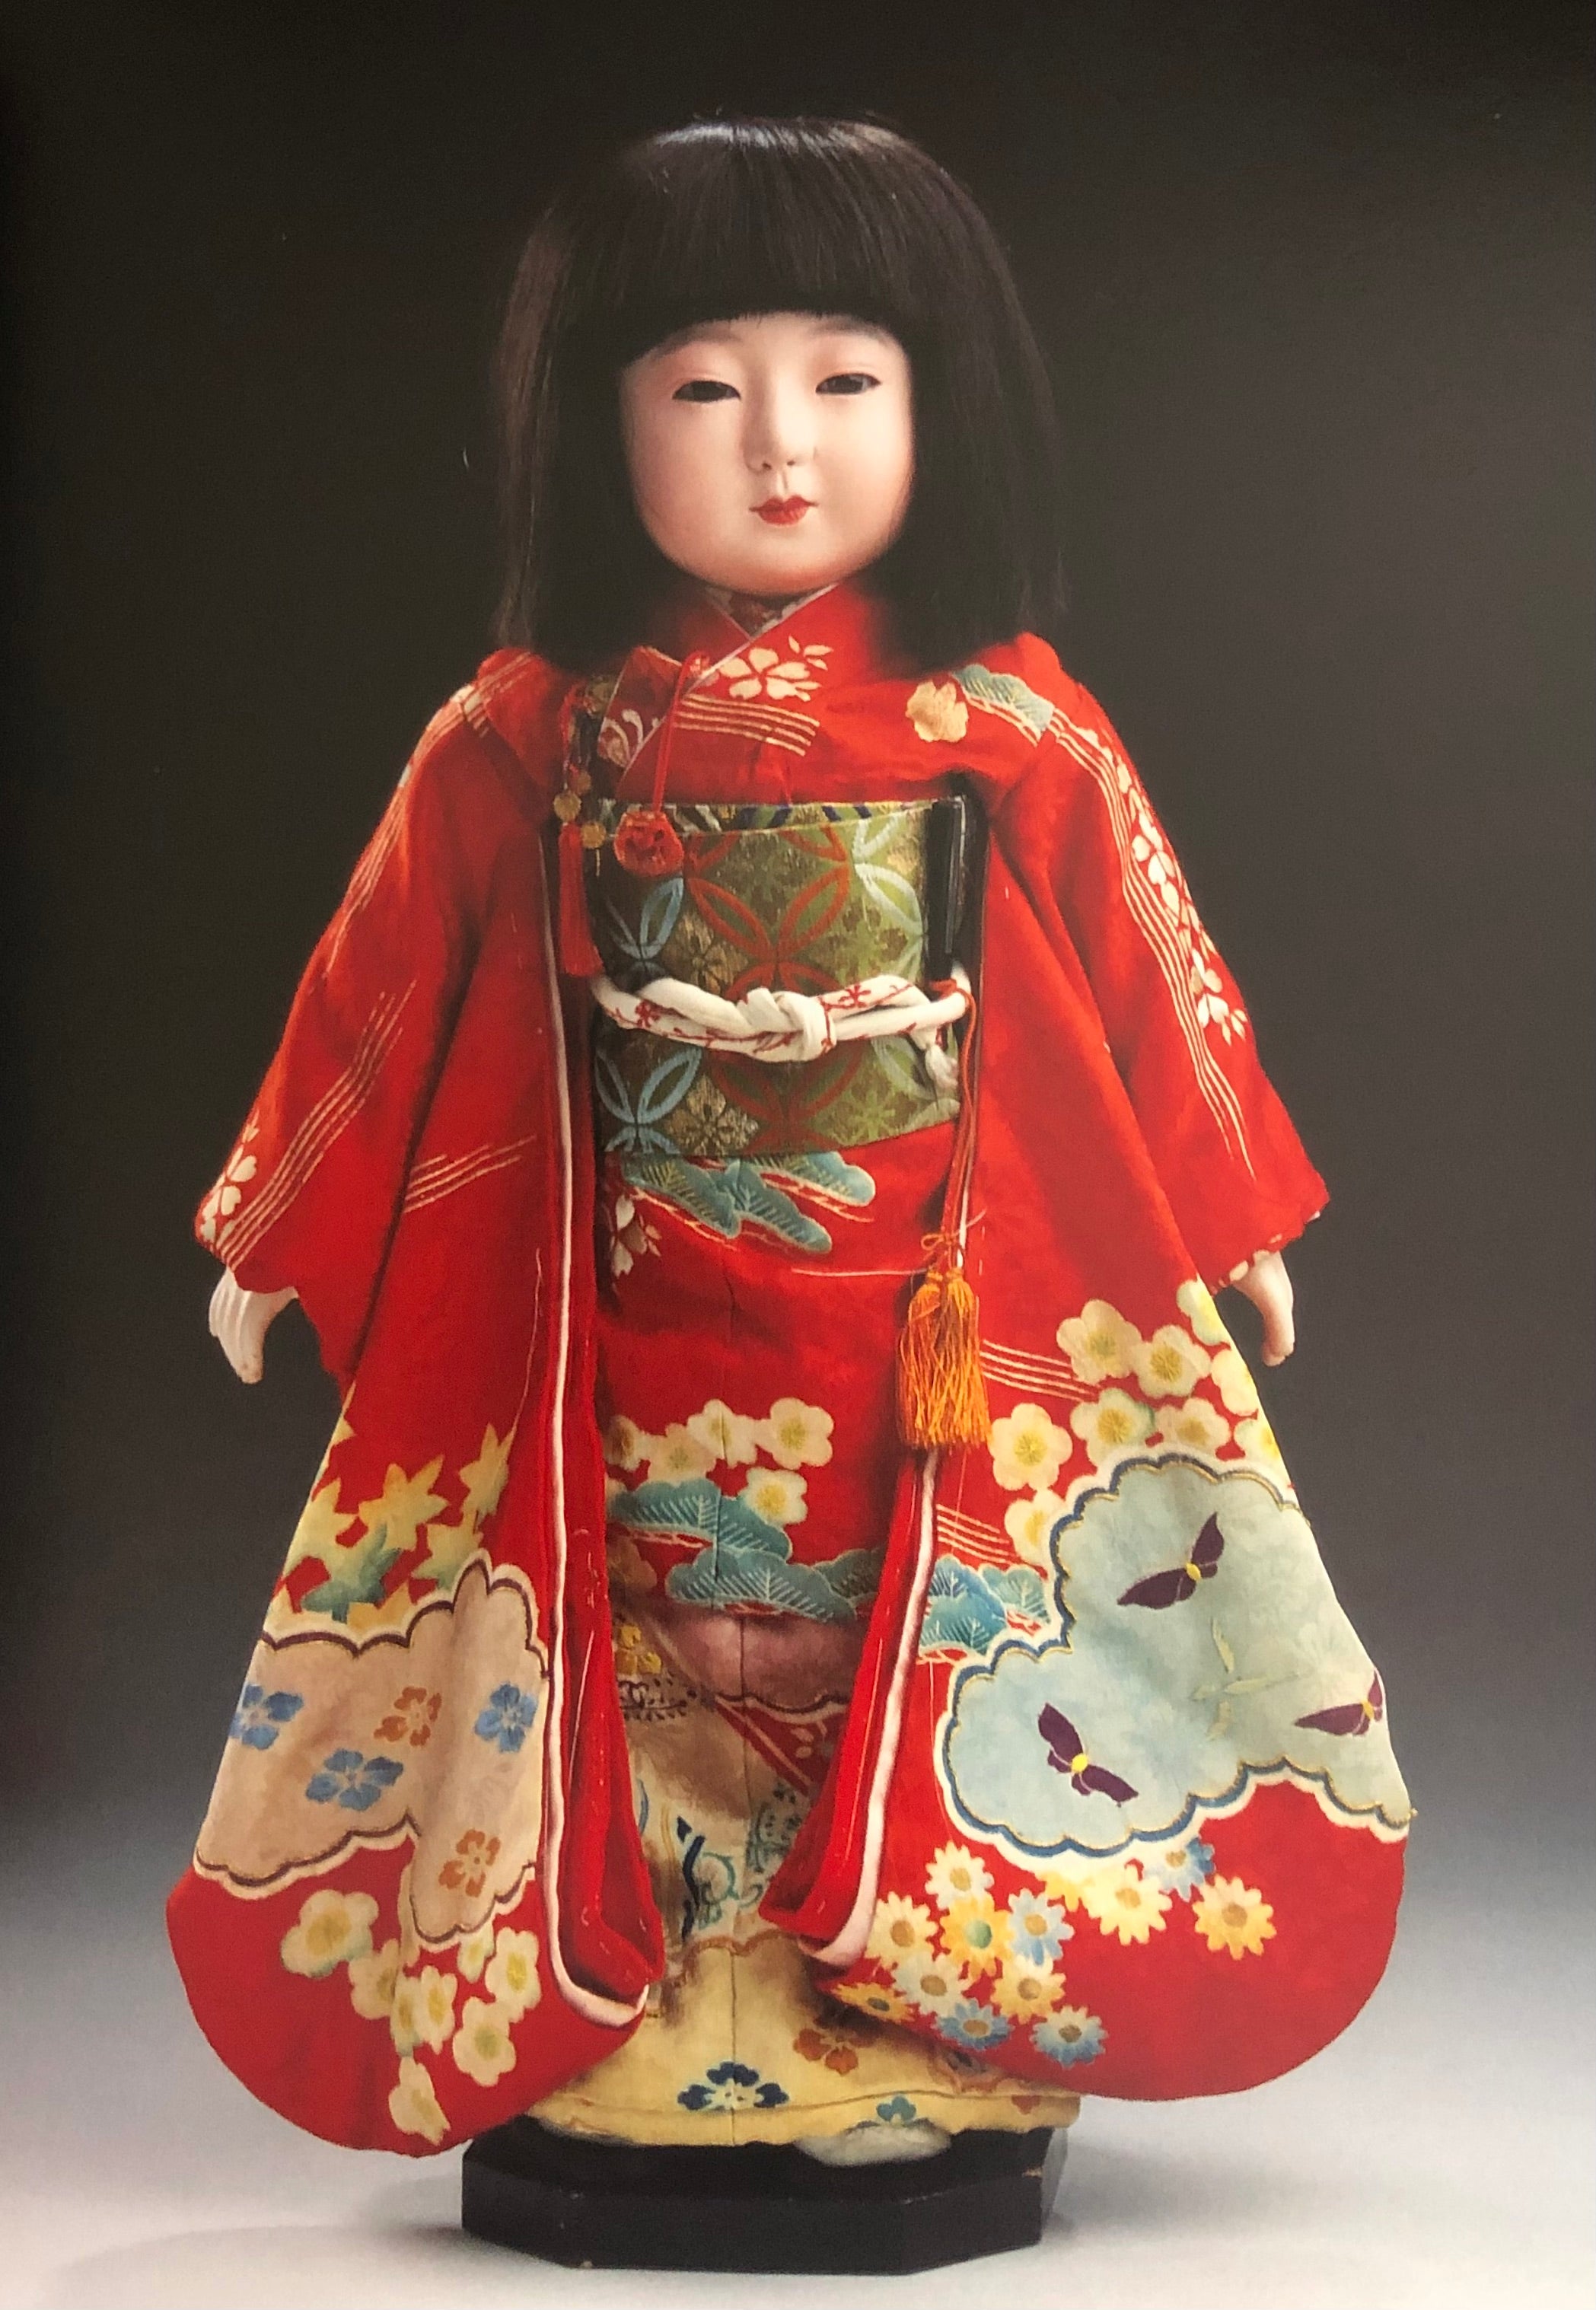 Ichimatsu - Dressed Up Traditional Japanese Dolls